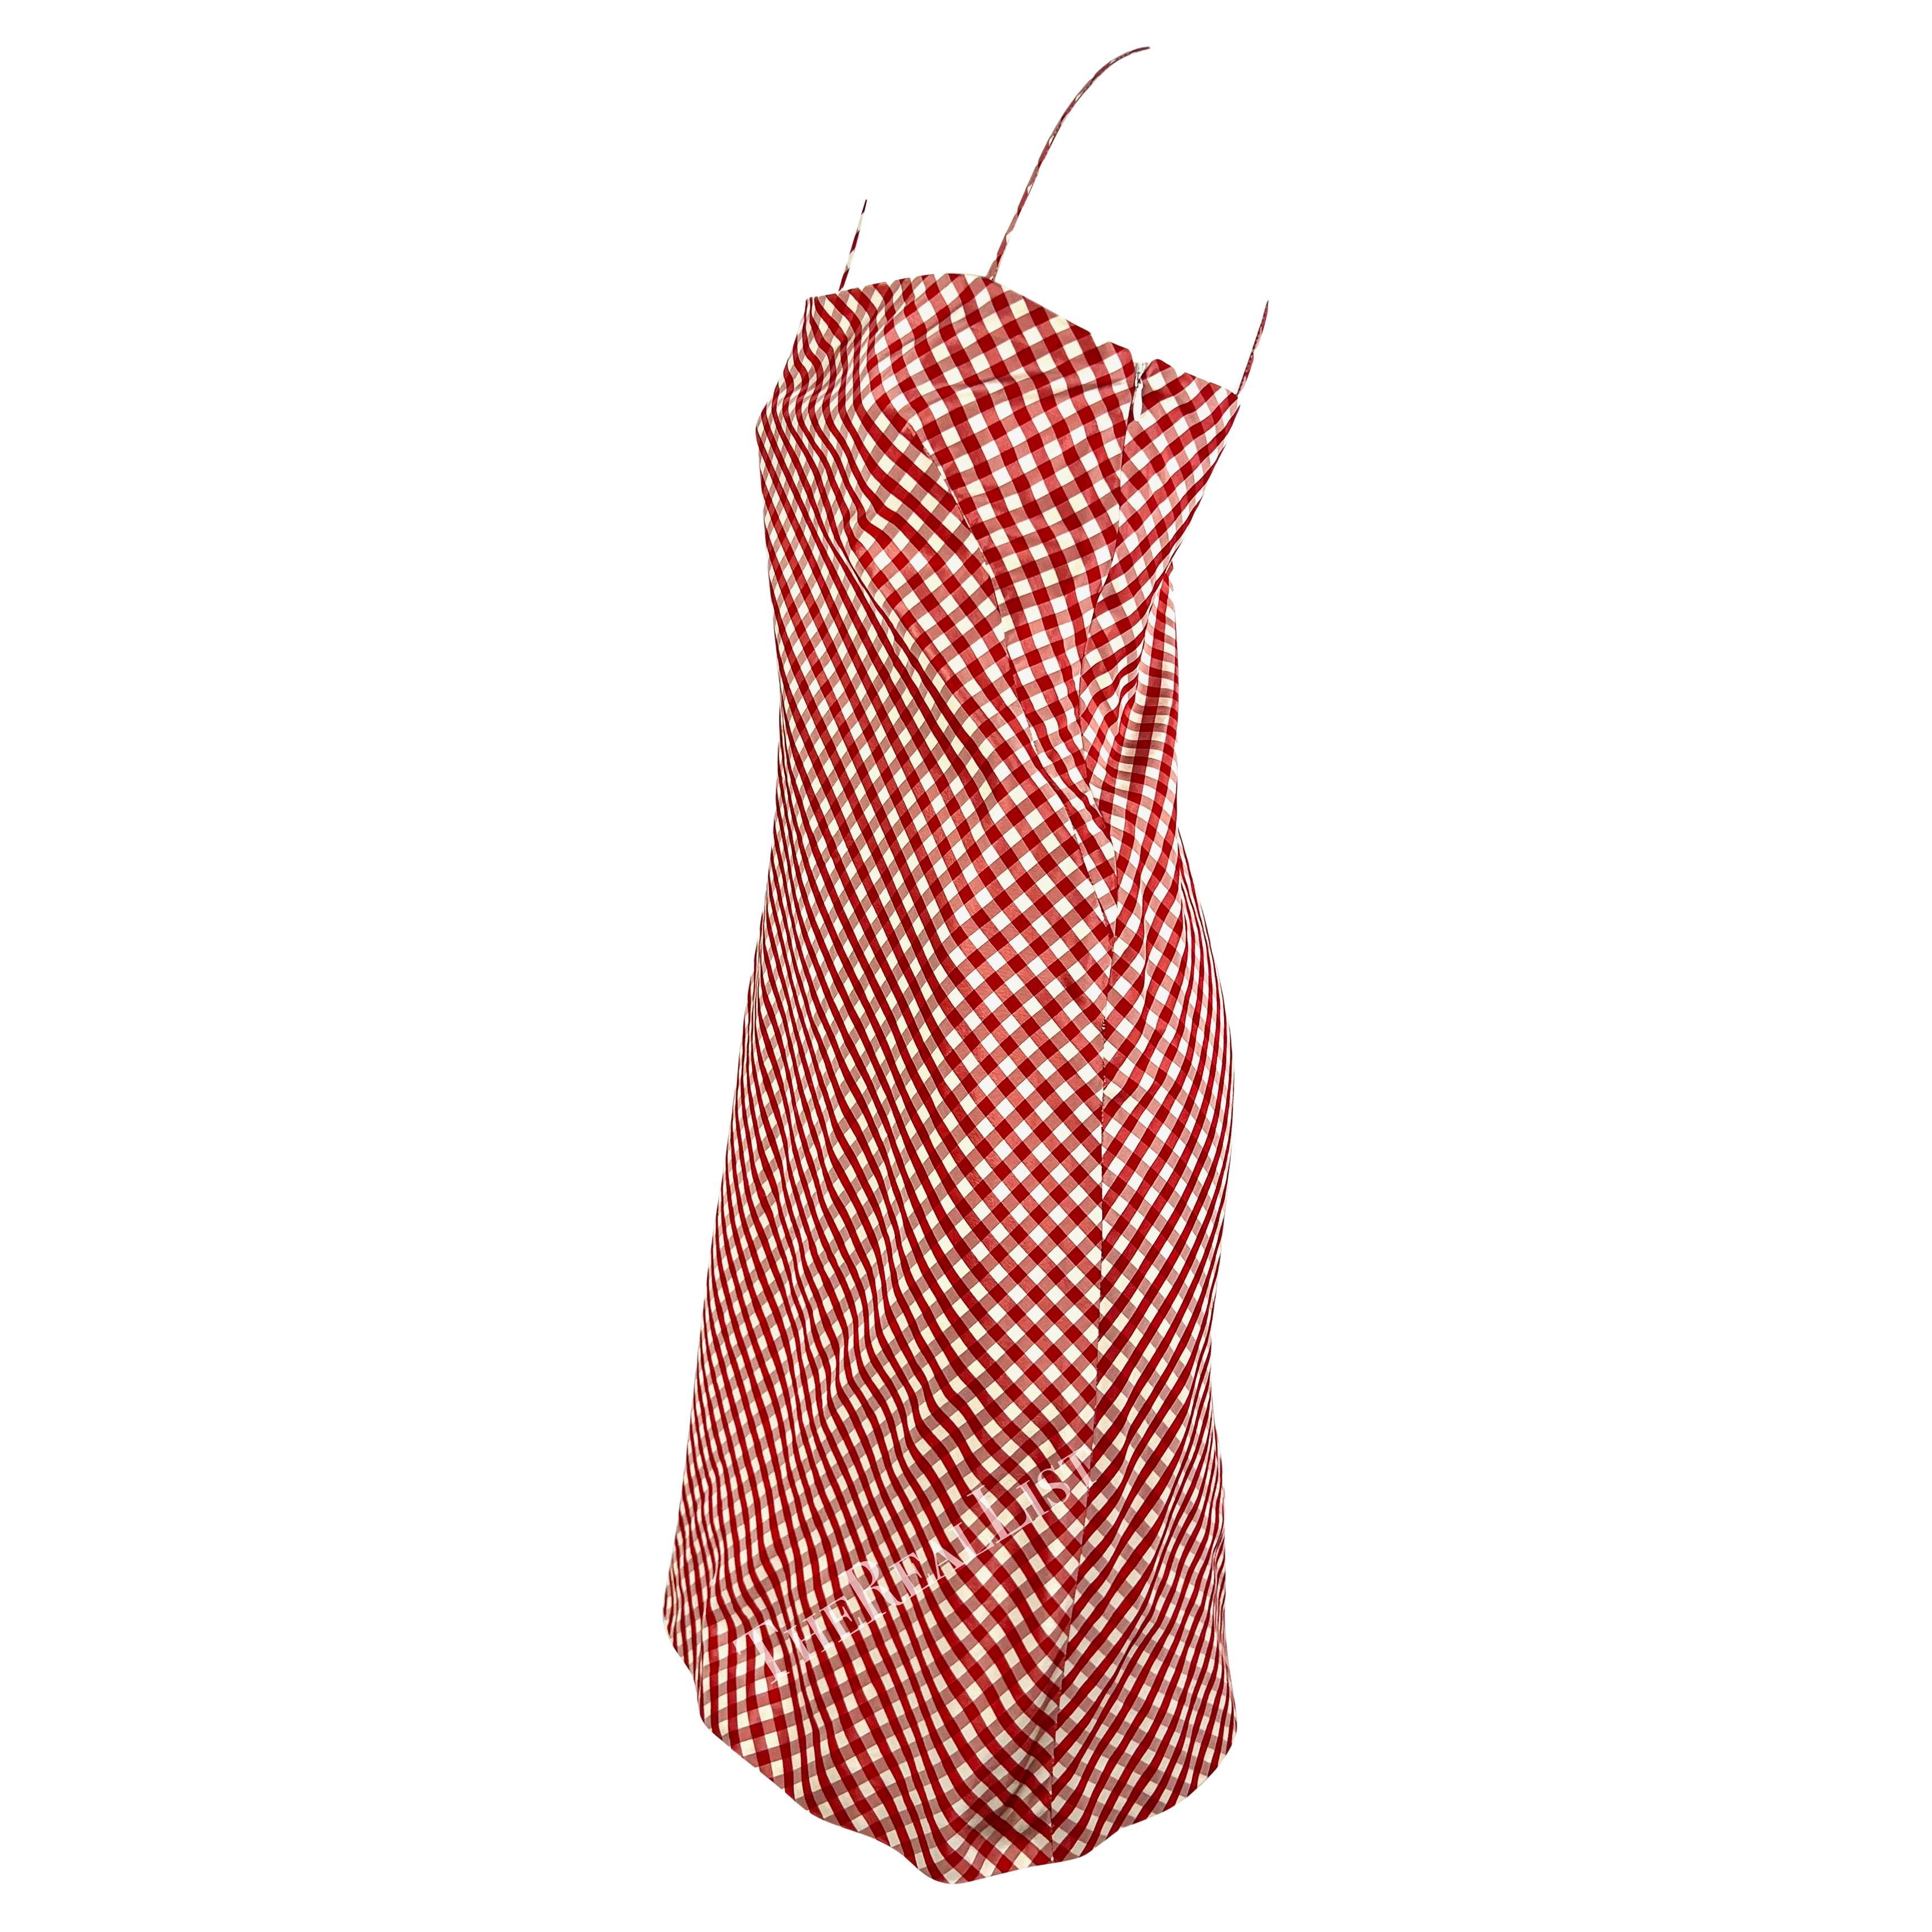 S/S 2000 Ralph Lauren Red Gingham Print Silk Taffeta Slip Runway Dress 3